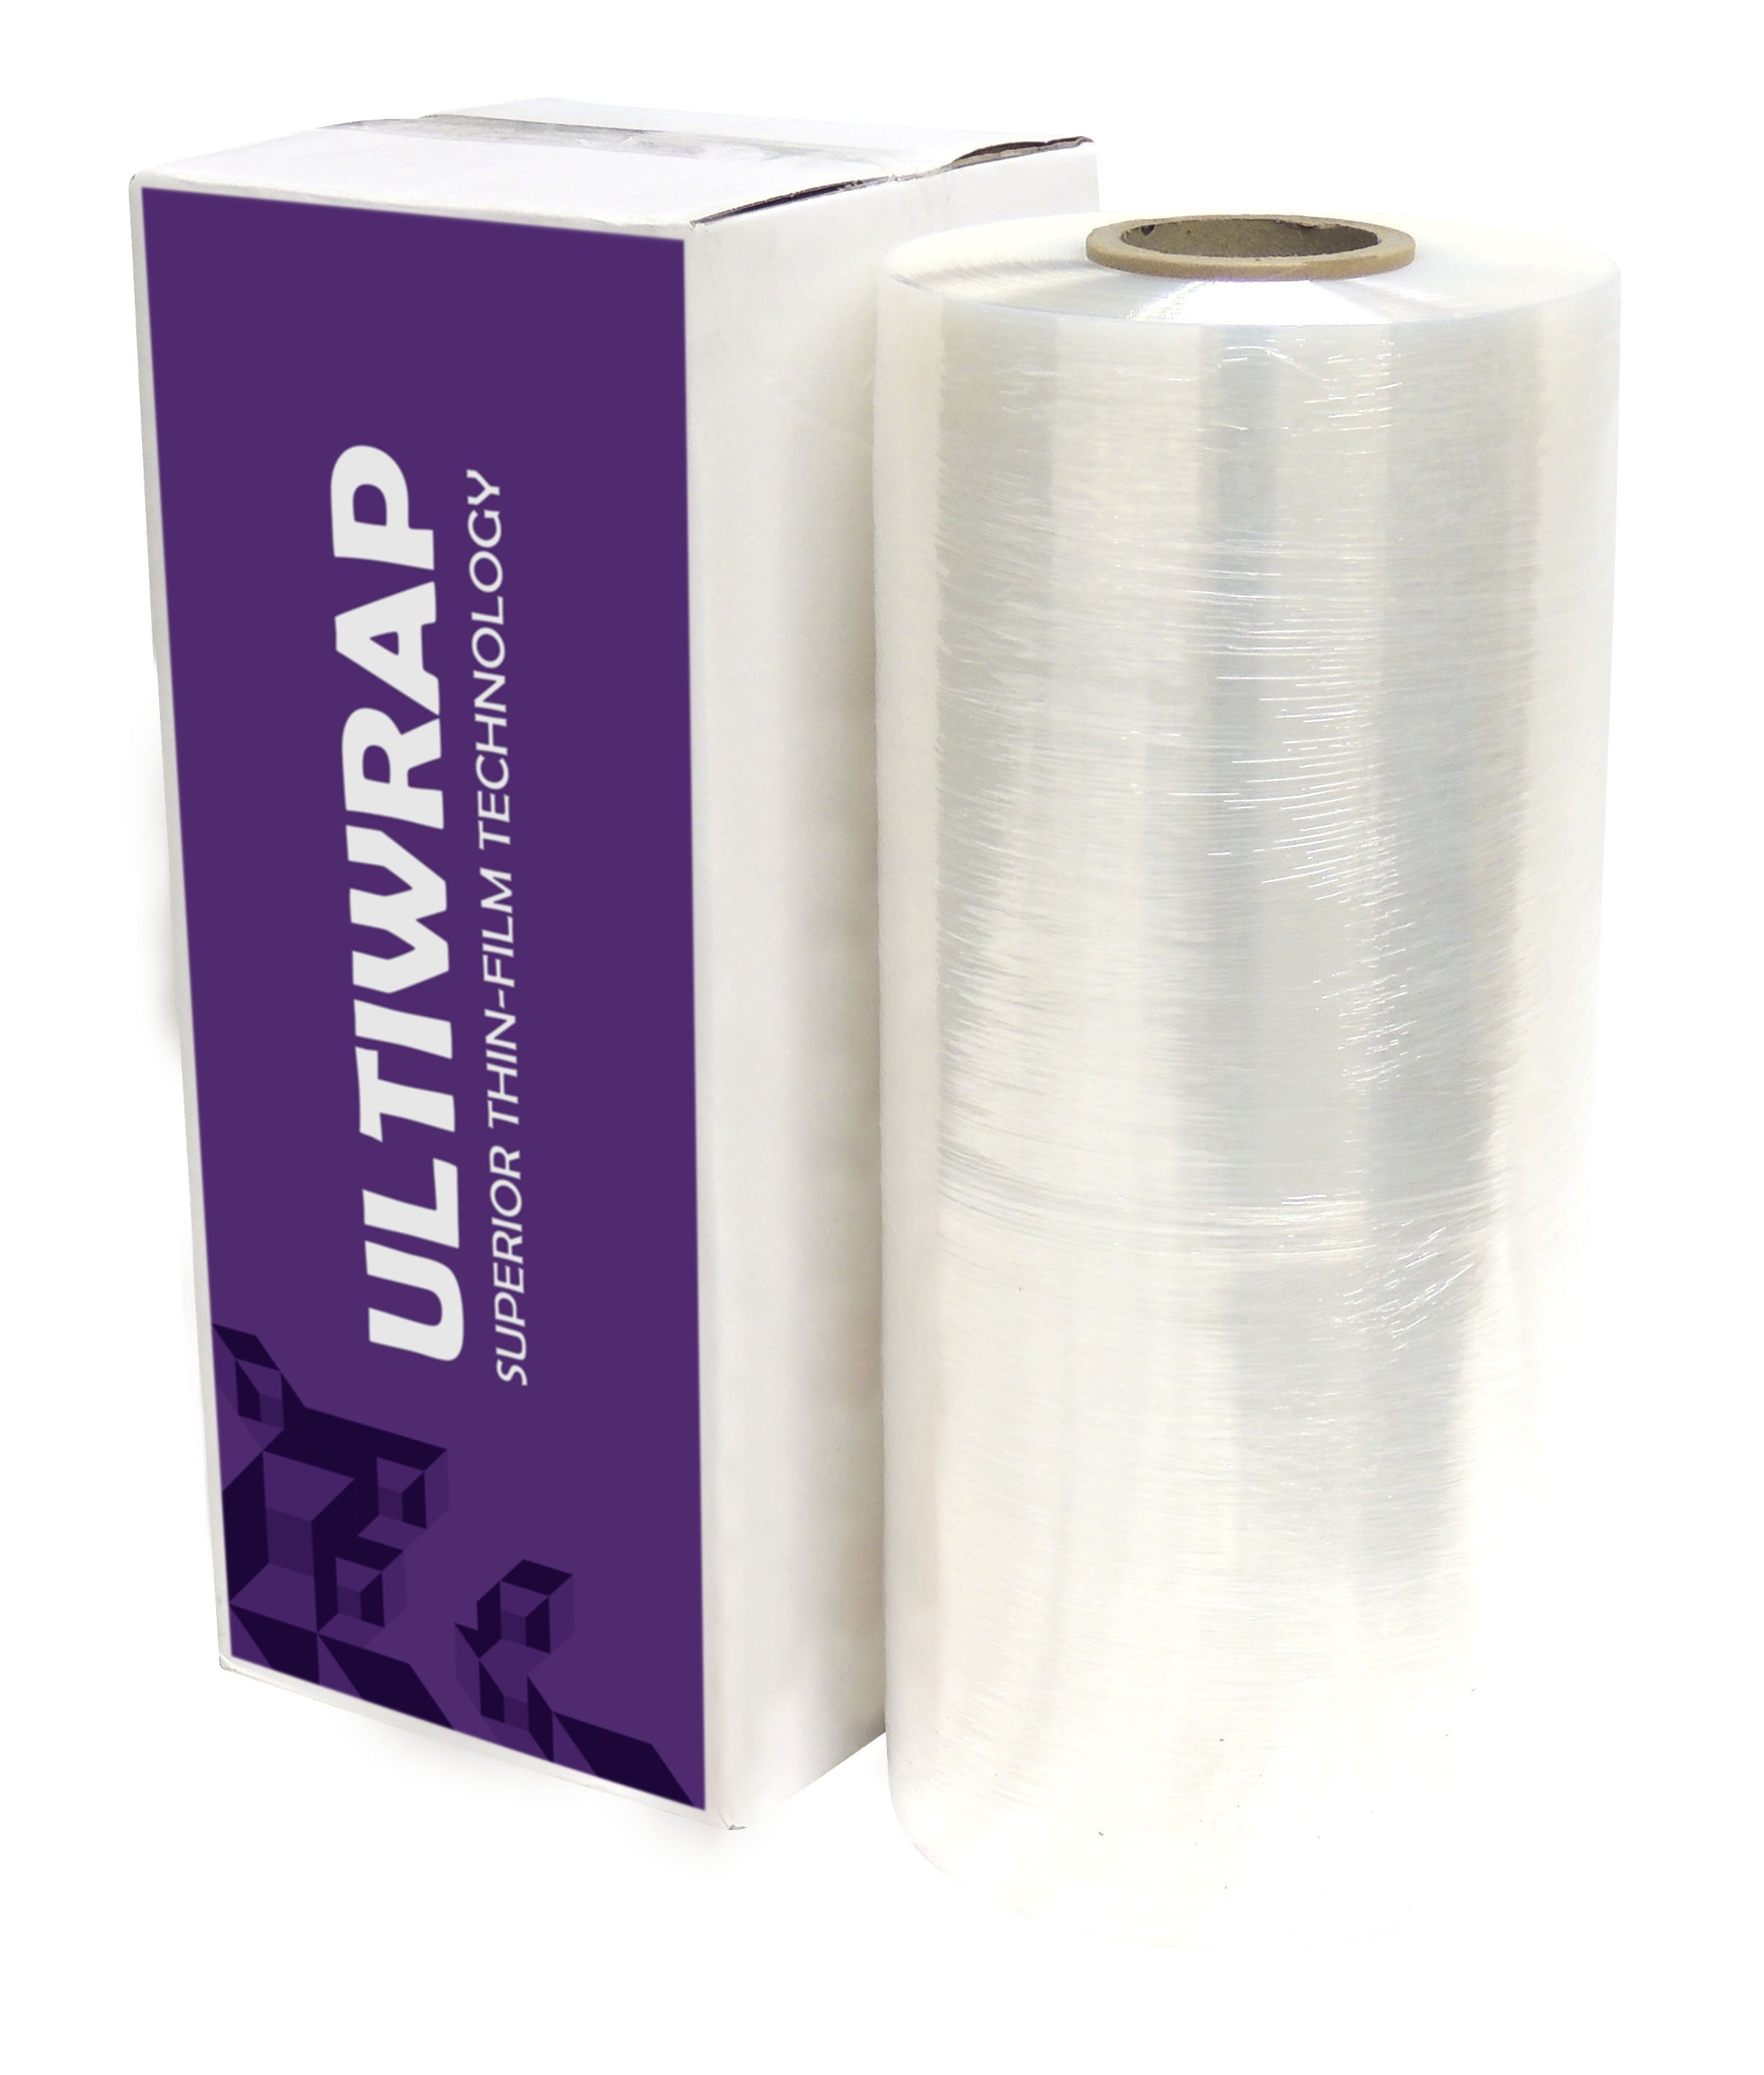 Ultiwrap machine wrap by Primepac